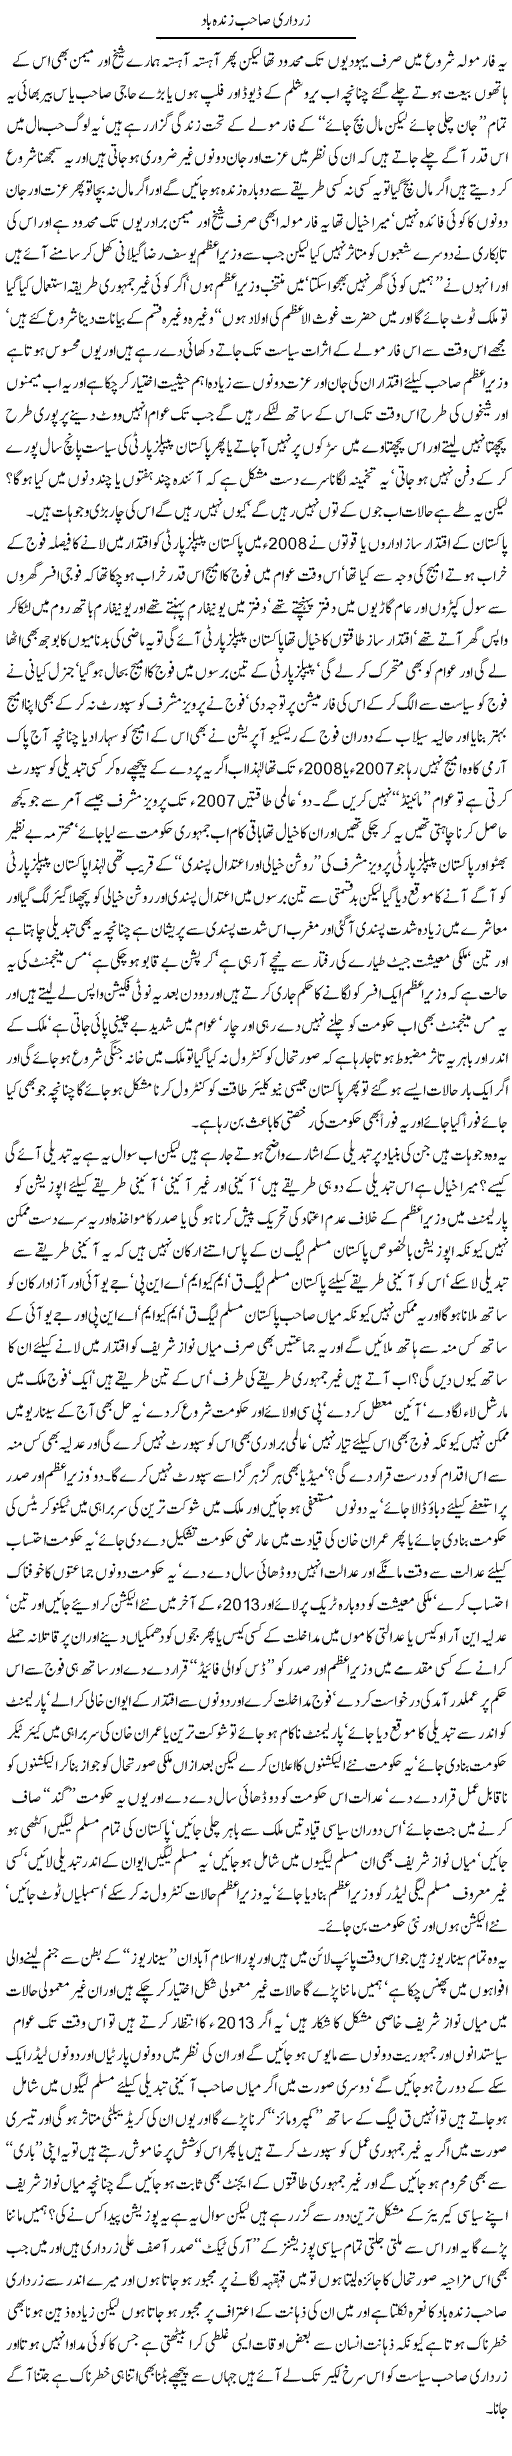 Mr Zardari Zindabad Express Column Javed Chaudhry 21 September 2010